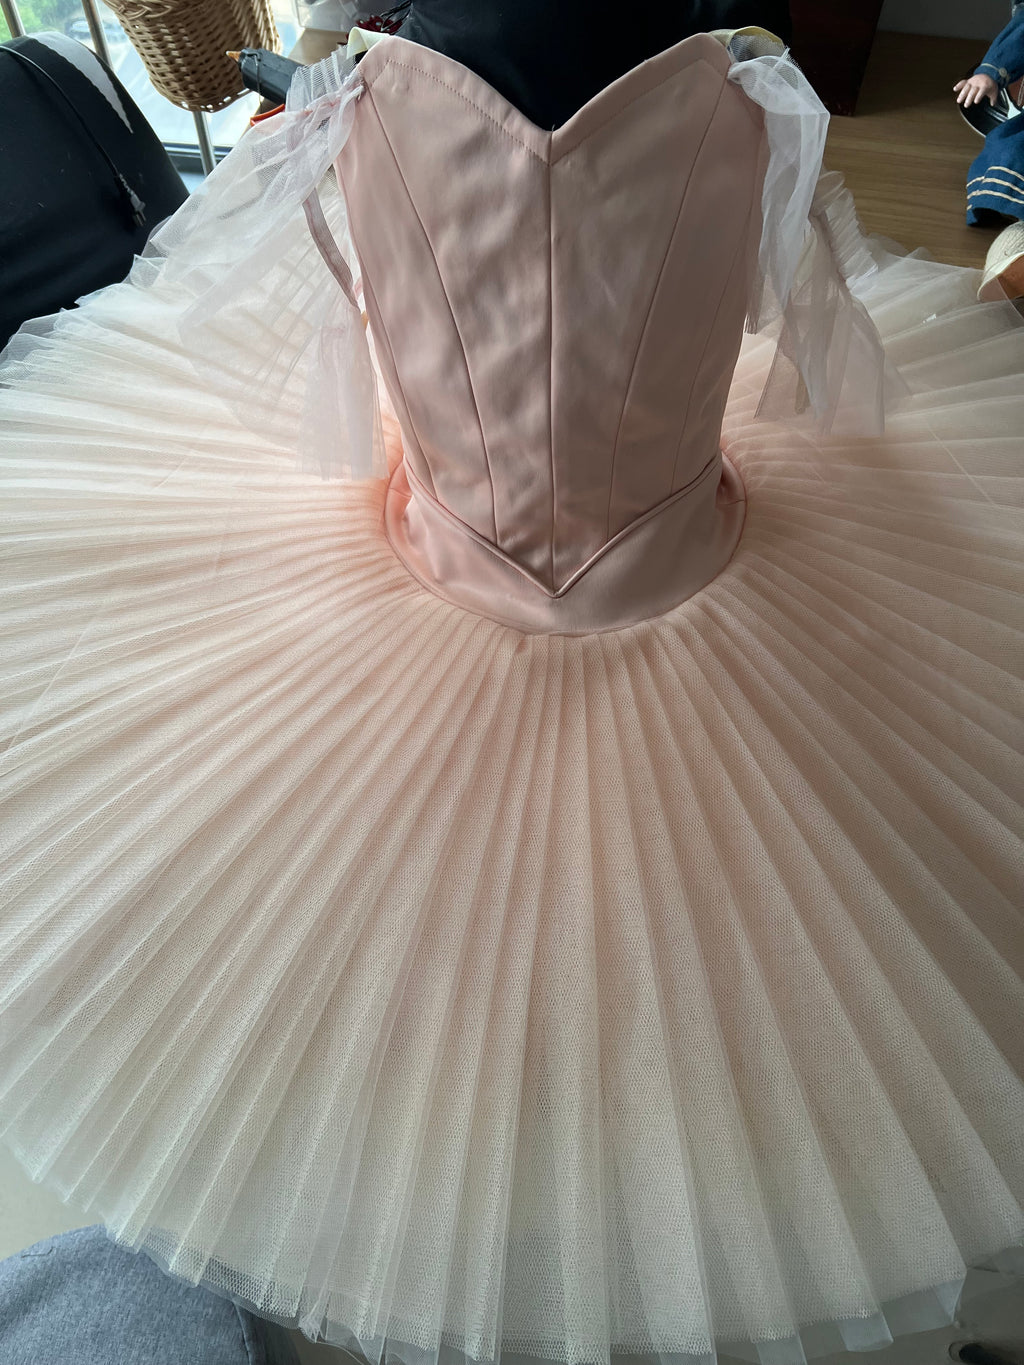 ** Sample Discount** Professional Peach Pink Classic Ballet TuTu Costume Plain Tutu For Self-decoration for Raymonda Sleeping Beauty